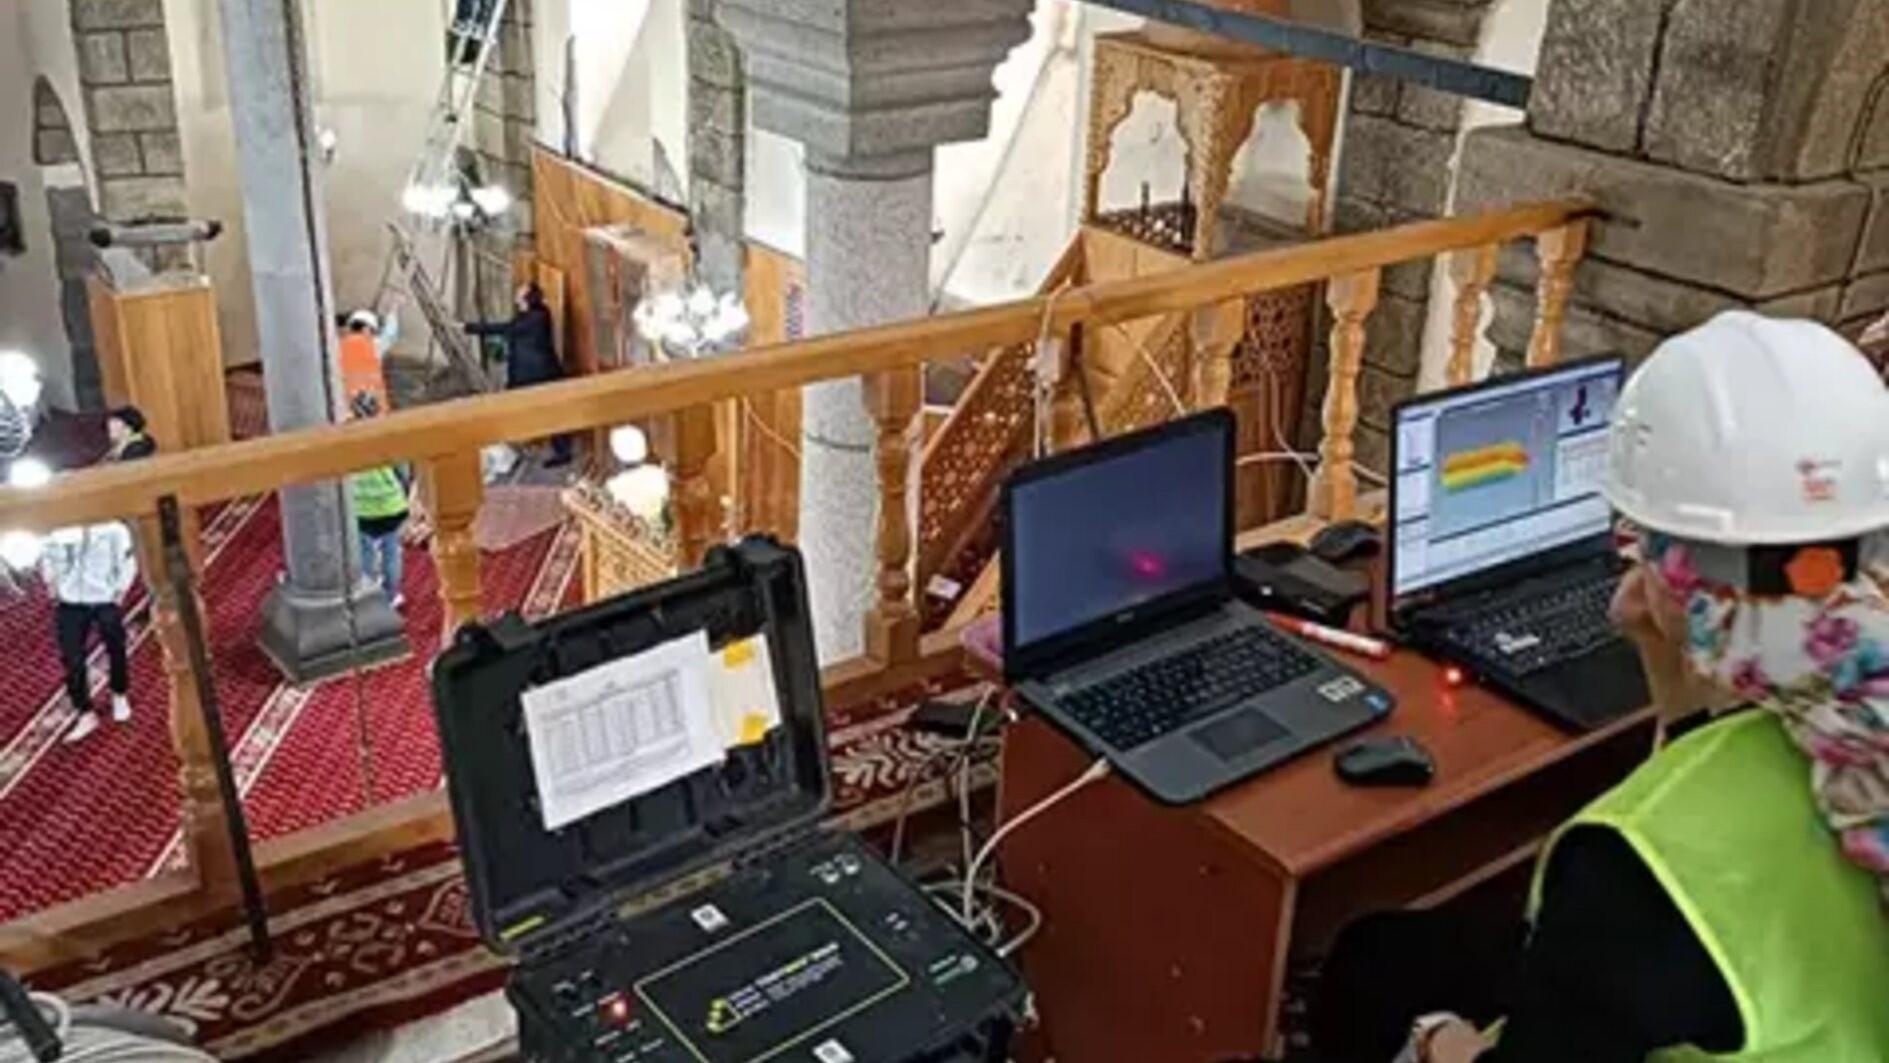 Restoration team ‘checks pulse’ of 170-year-old building